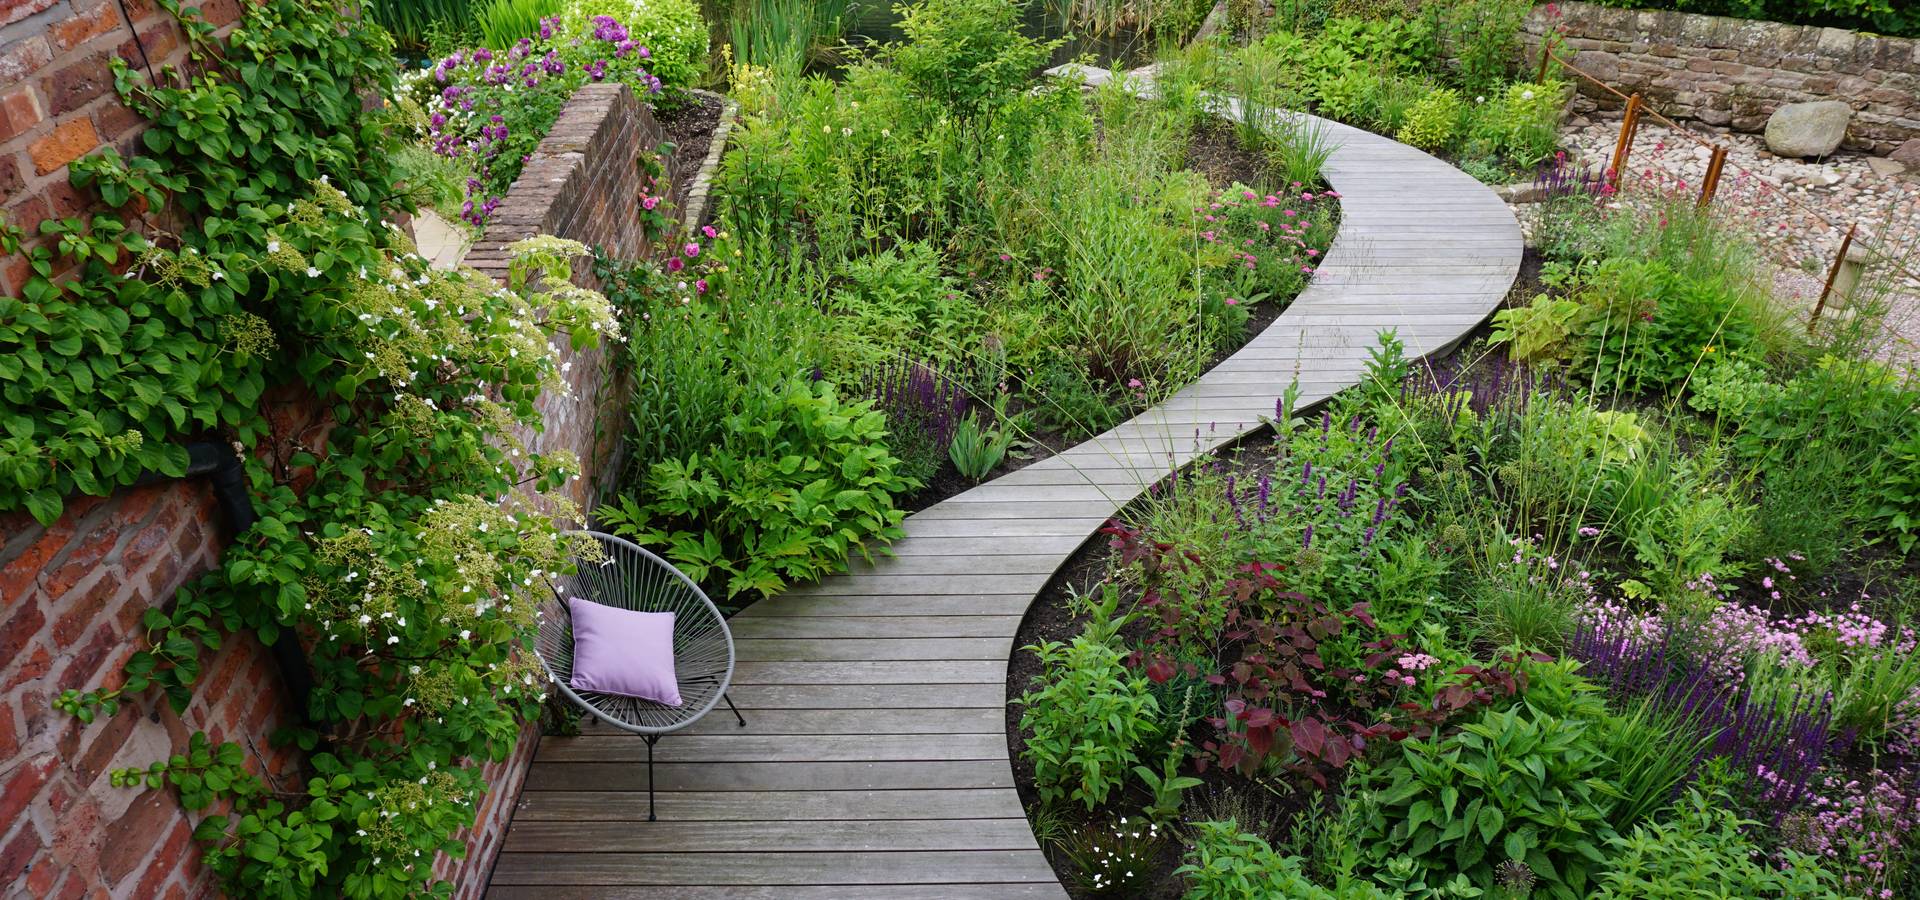 Joanne Willcocks, Gardens by Design